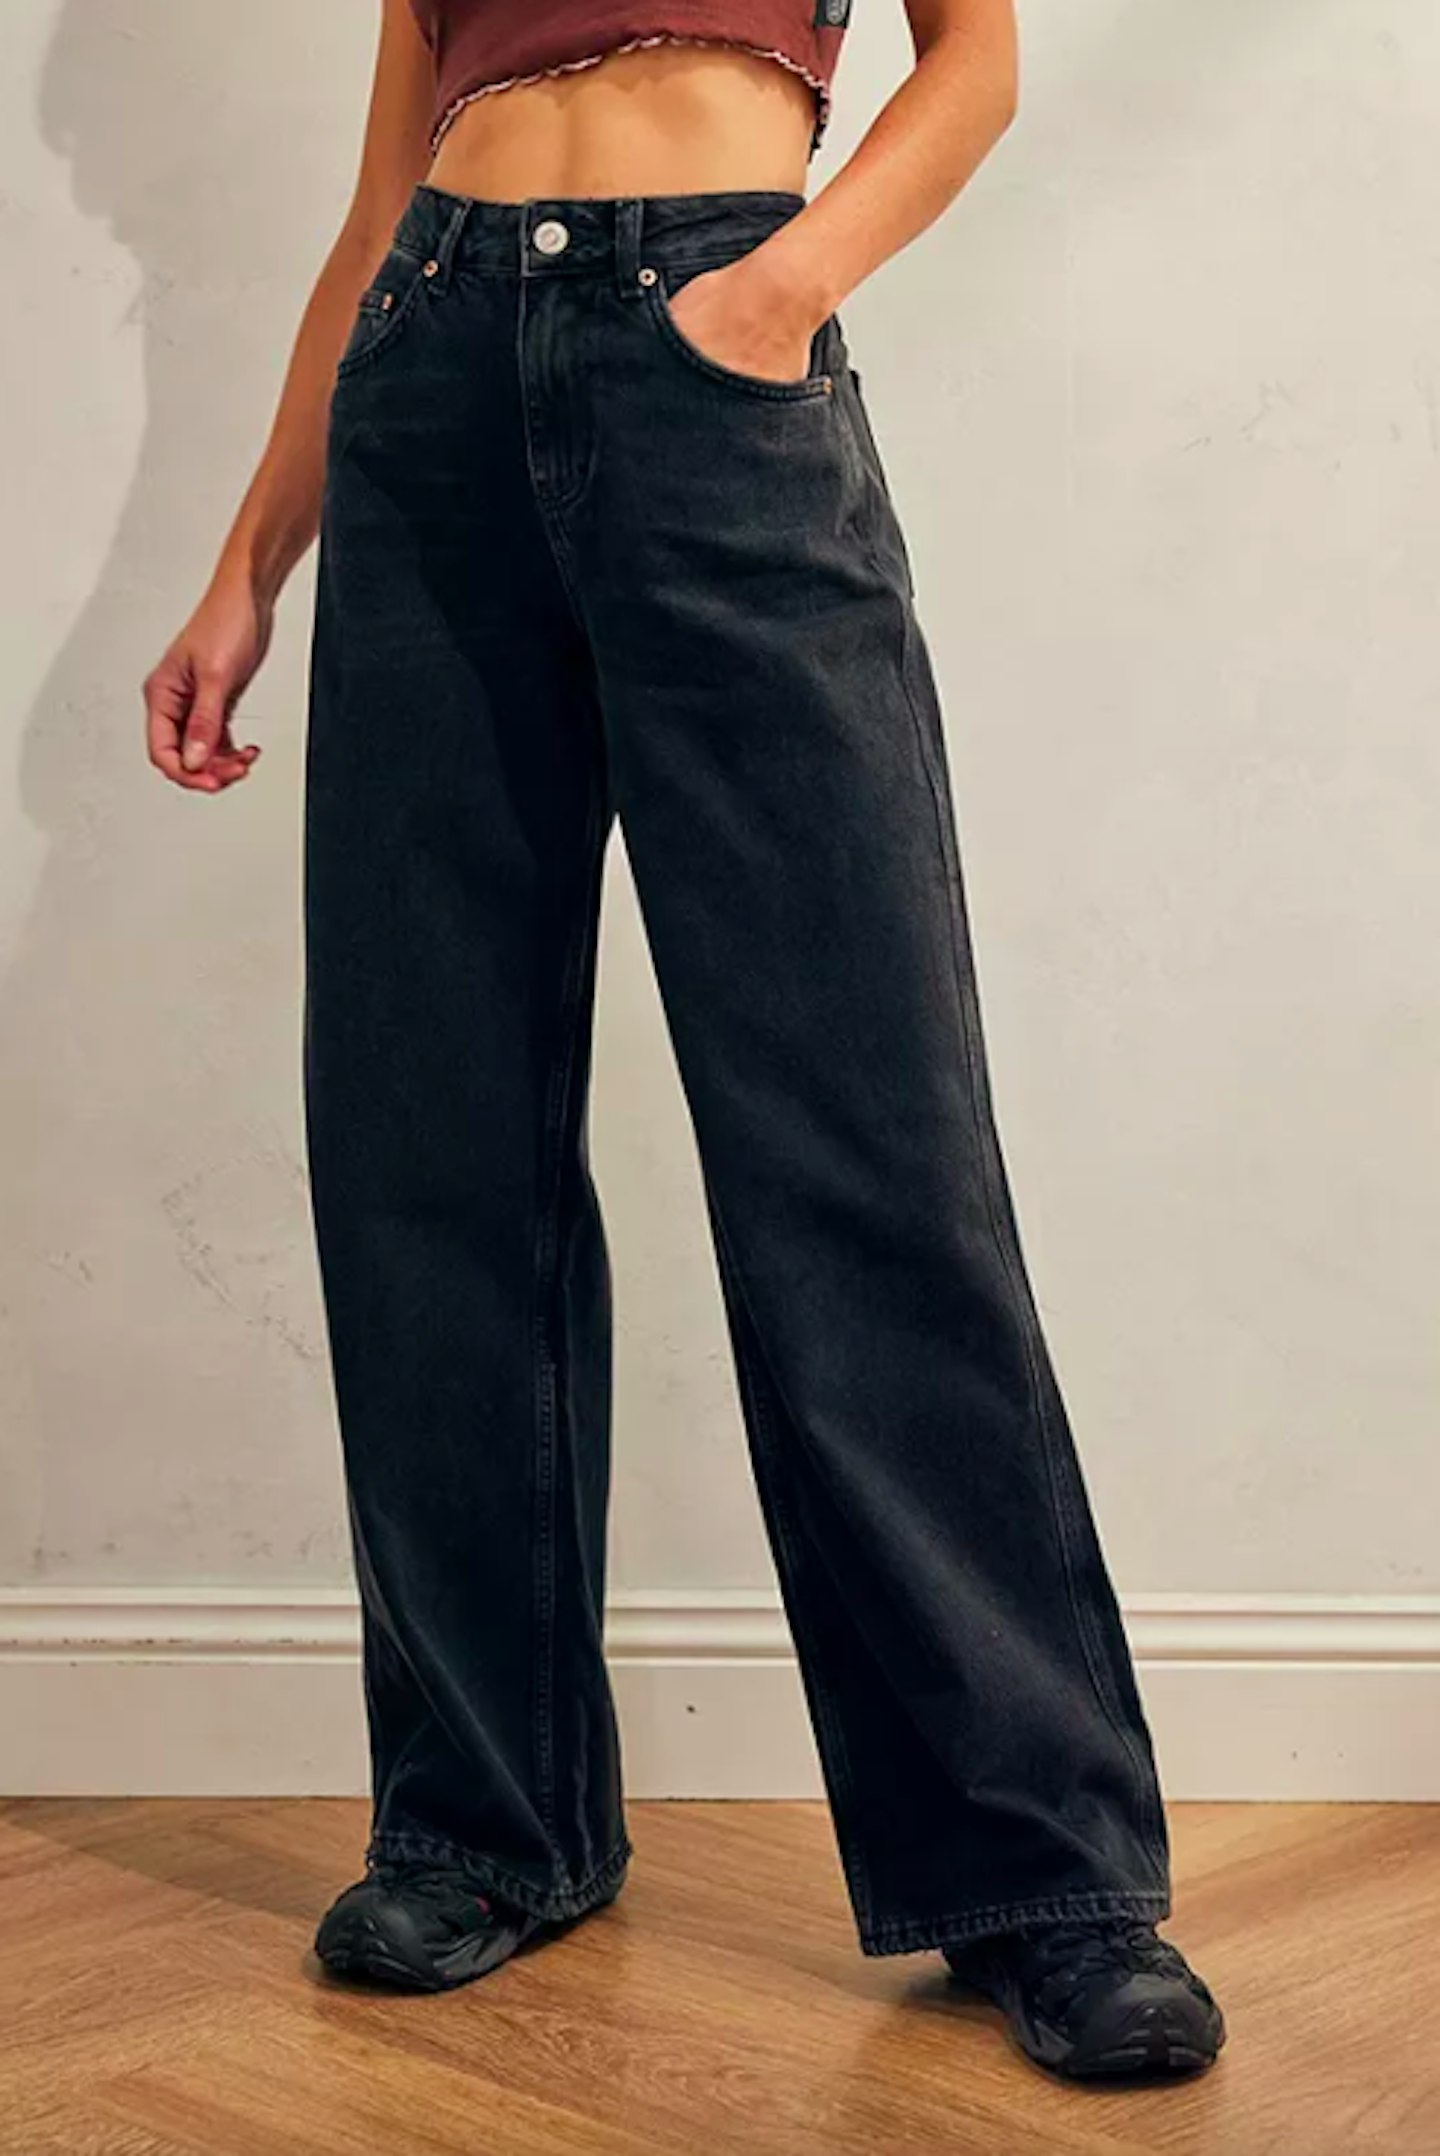 Sienna Miller's High Street Jeans Are £55 | Fashion | Grazia